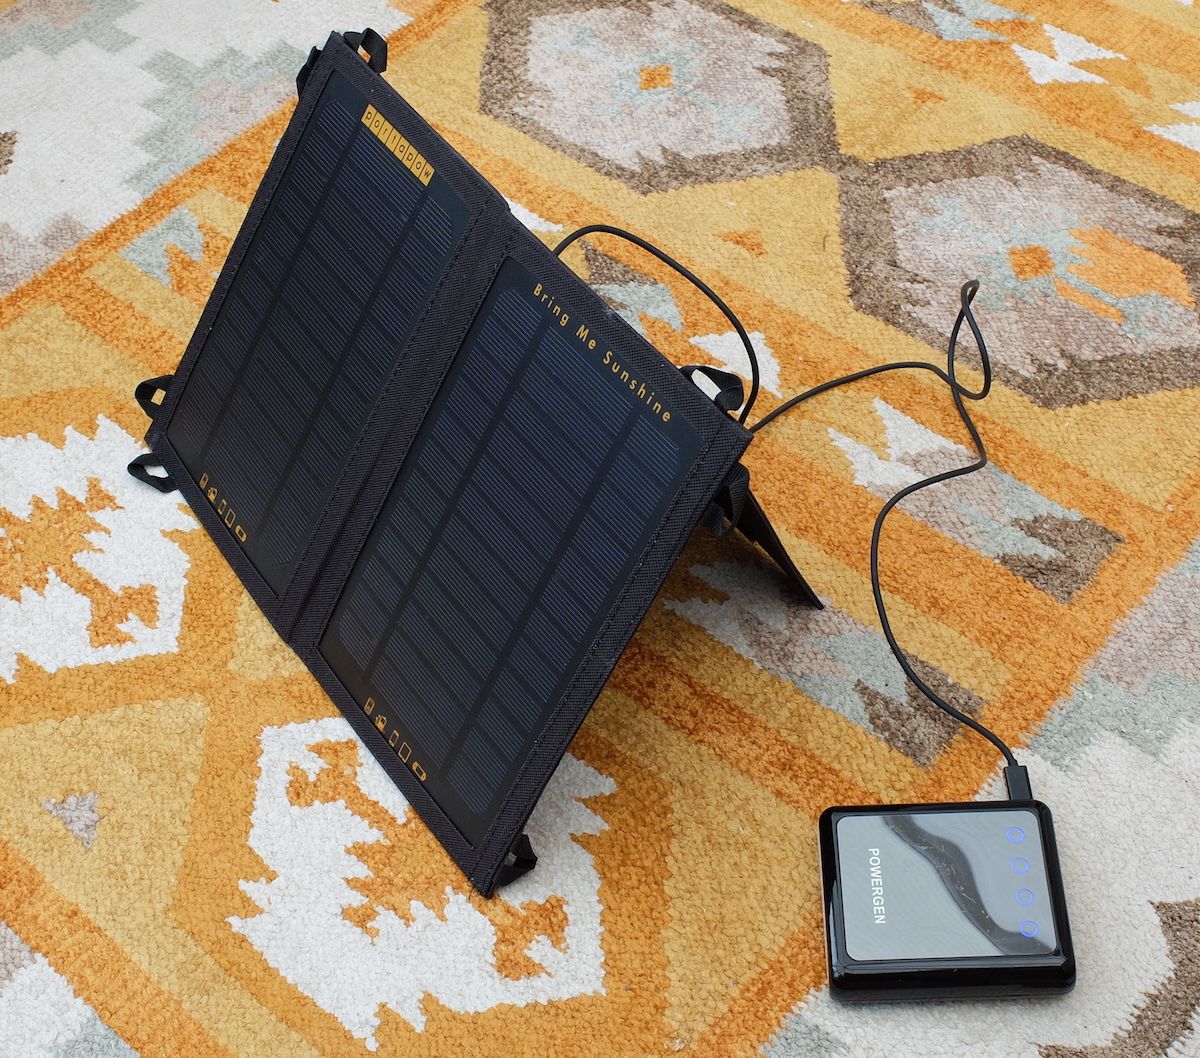 Solar panel and 12,000mAh USB power supply